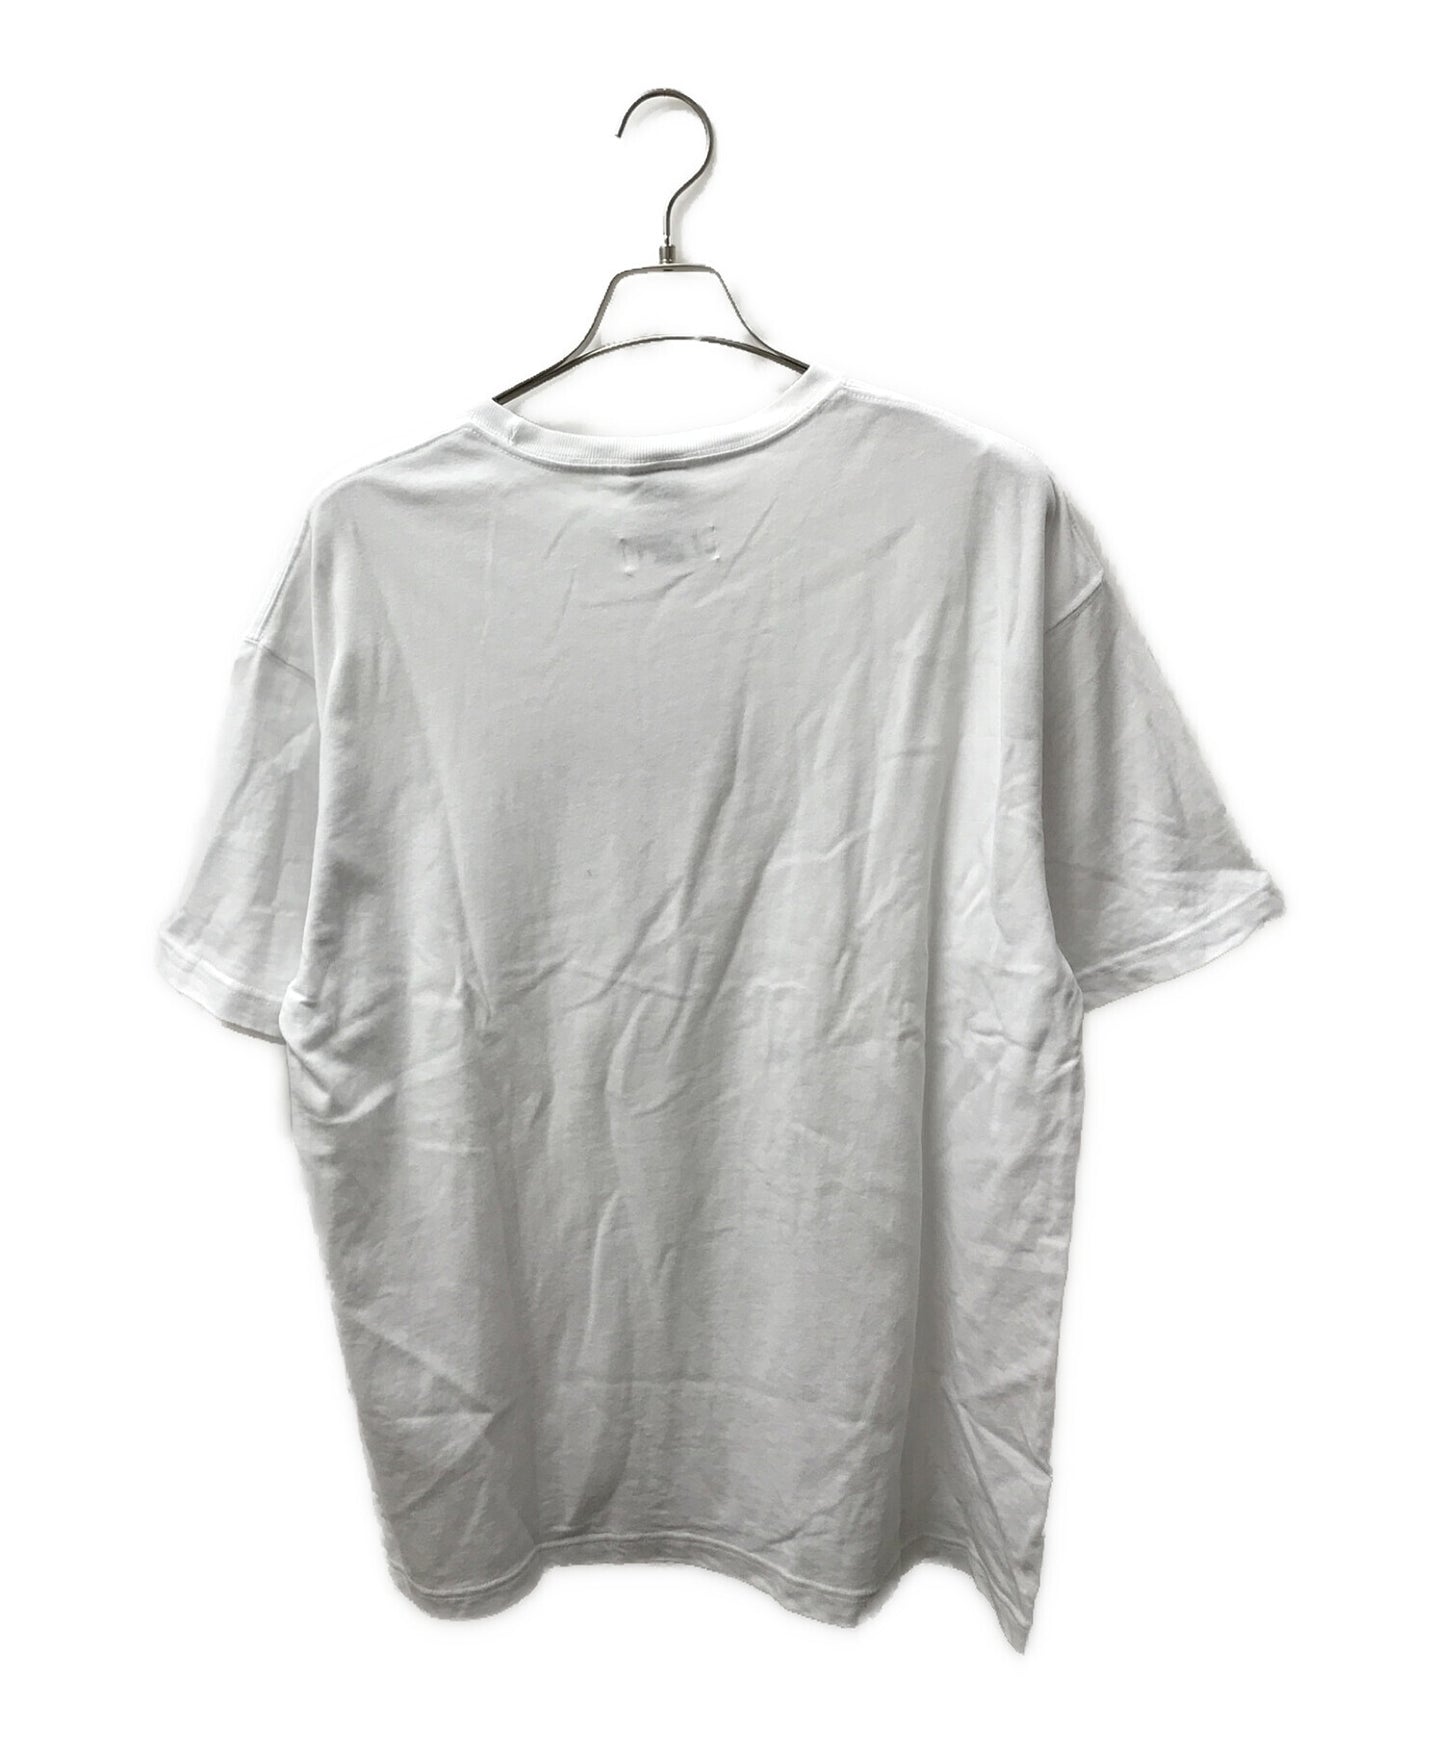 yohji yamamoto x 새로운 시대 협력 티셔츠 / 짧은 슬리브 로고 티셔츠 티셔츠 / 짧은 슬리브 컷 및 바느질 티셔츠 HC-T96-076